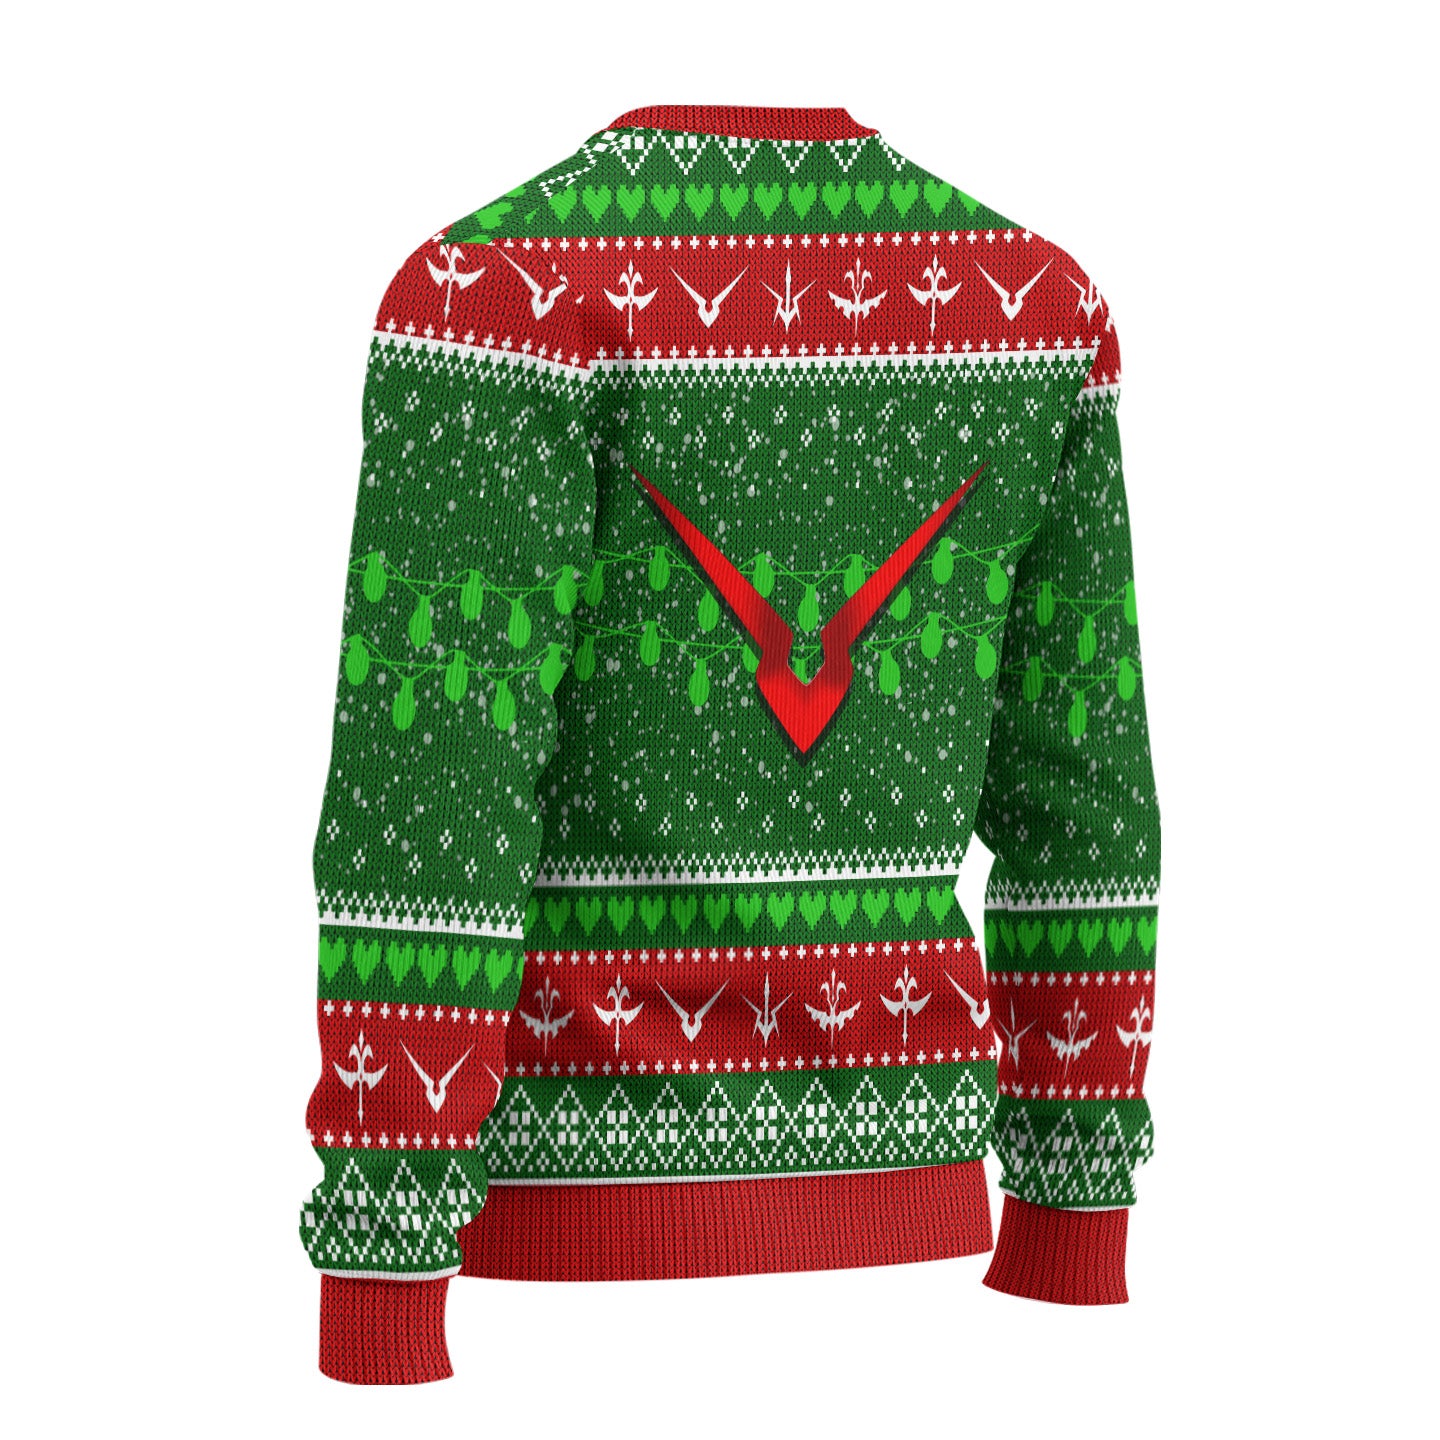 Code Geass Anime Ugly Christmas Sweater Custom New Design